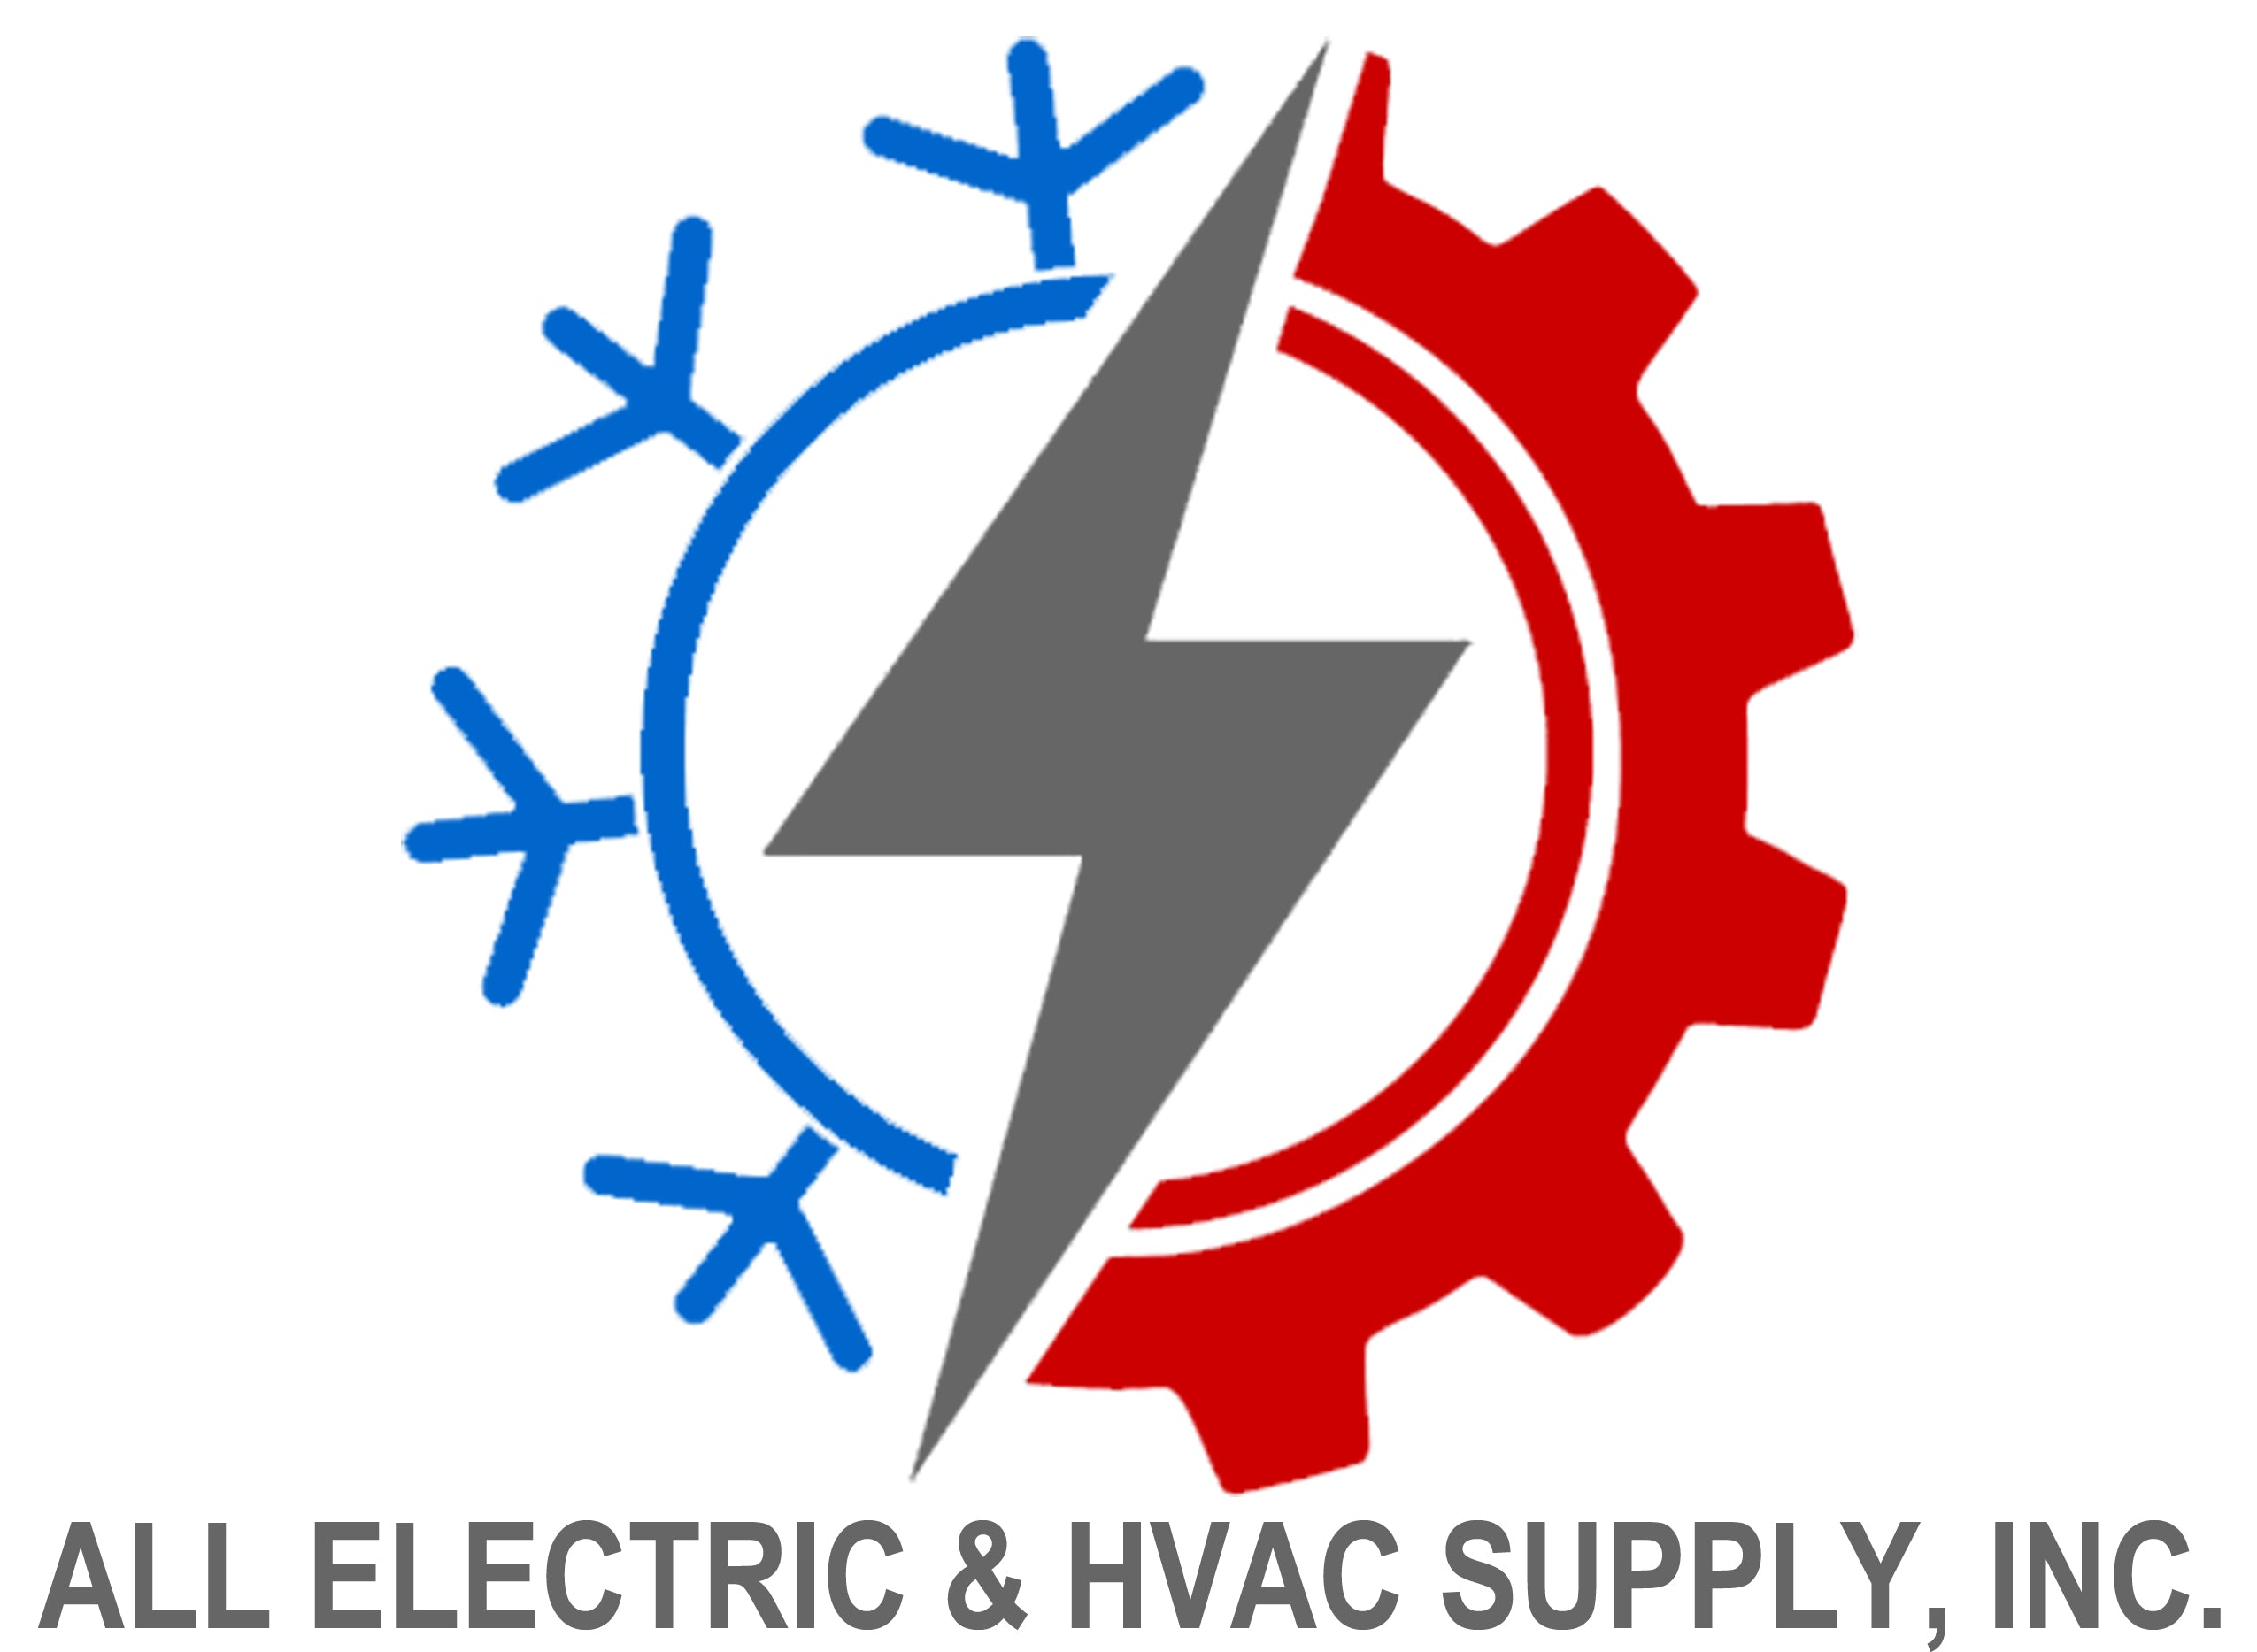 All Electric & HVAC Supply, Inc.